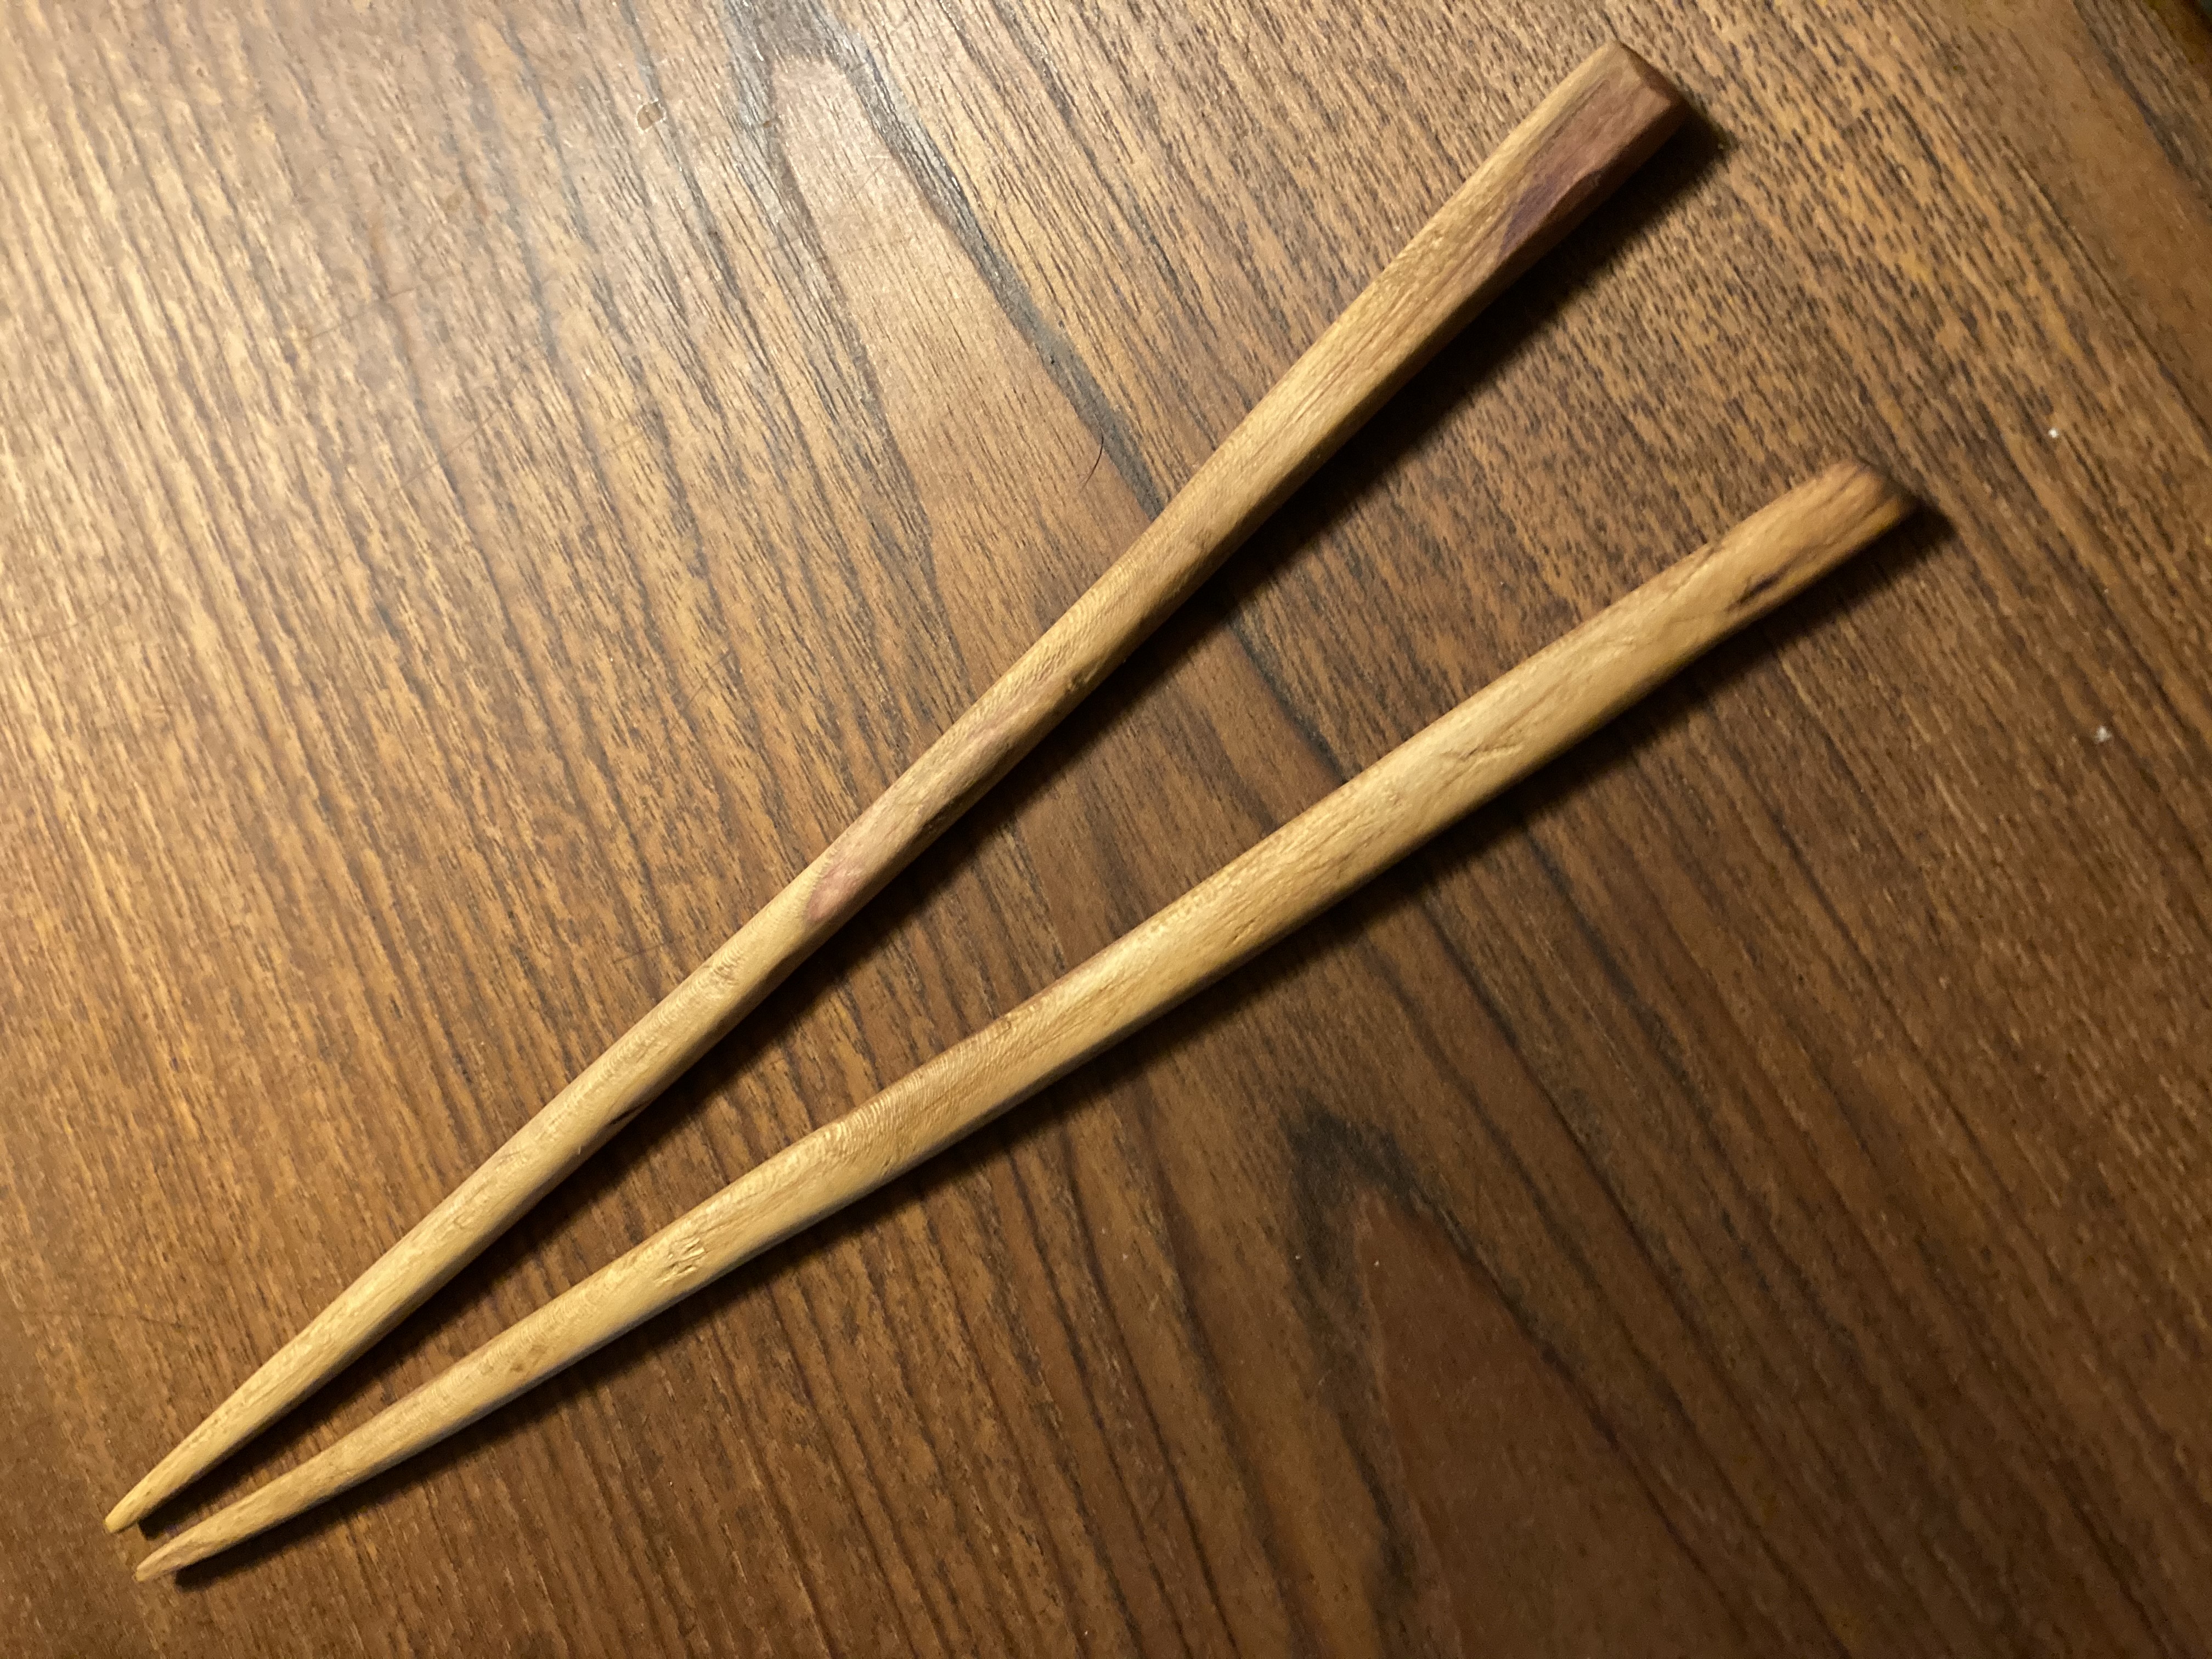 image of a pair of handmade chopsticks on a woodgrain background.